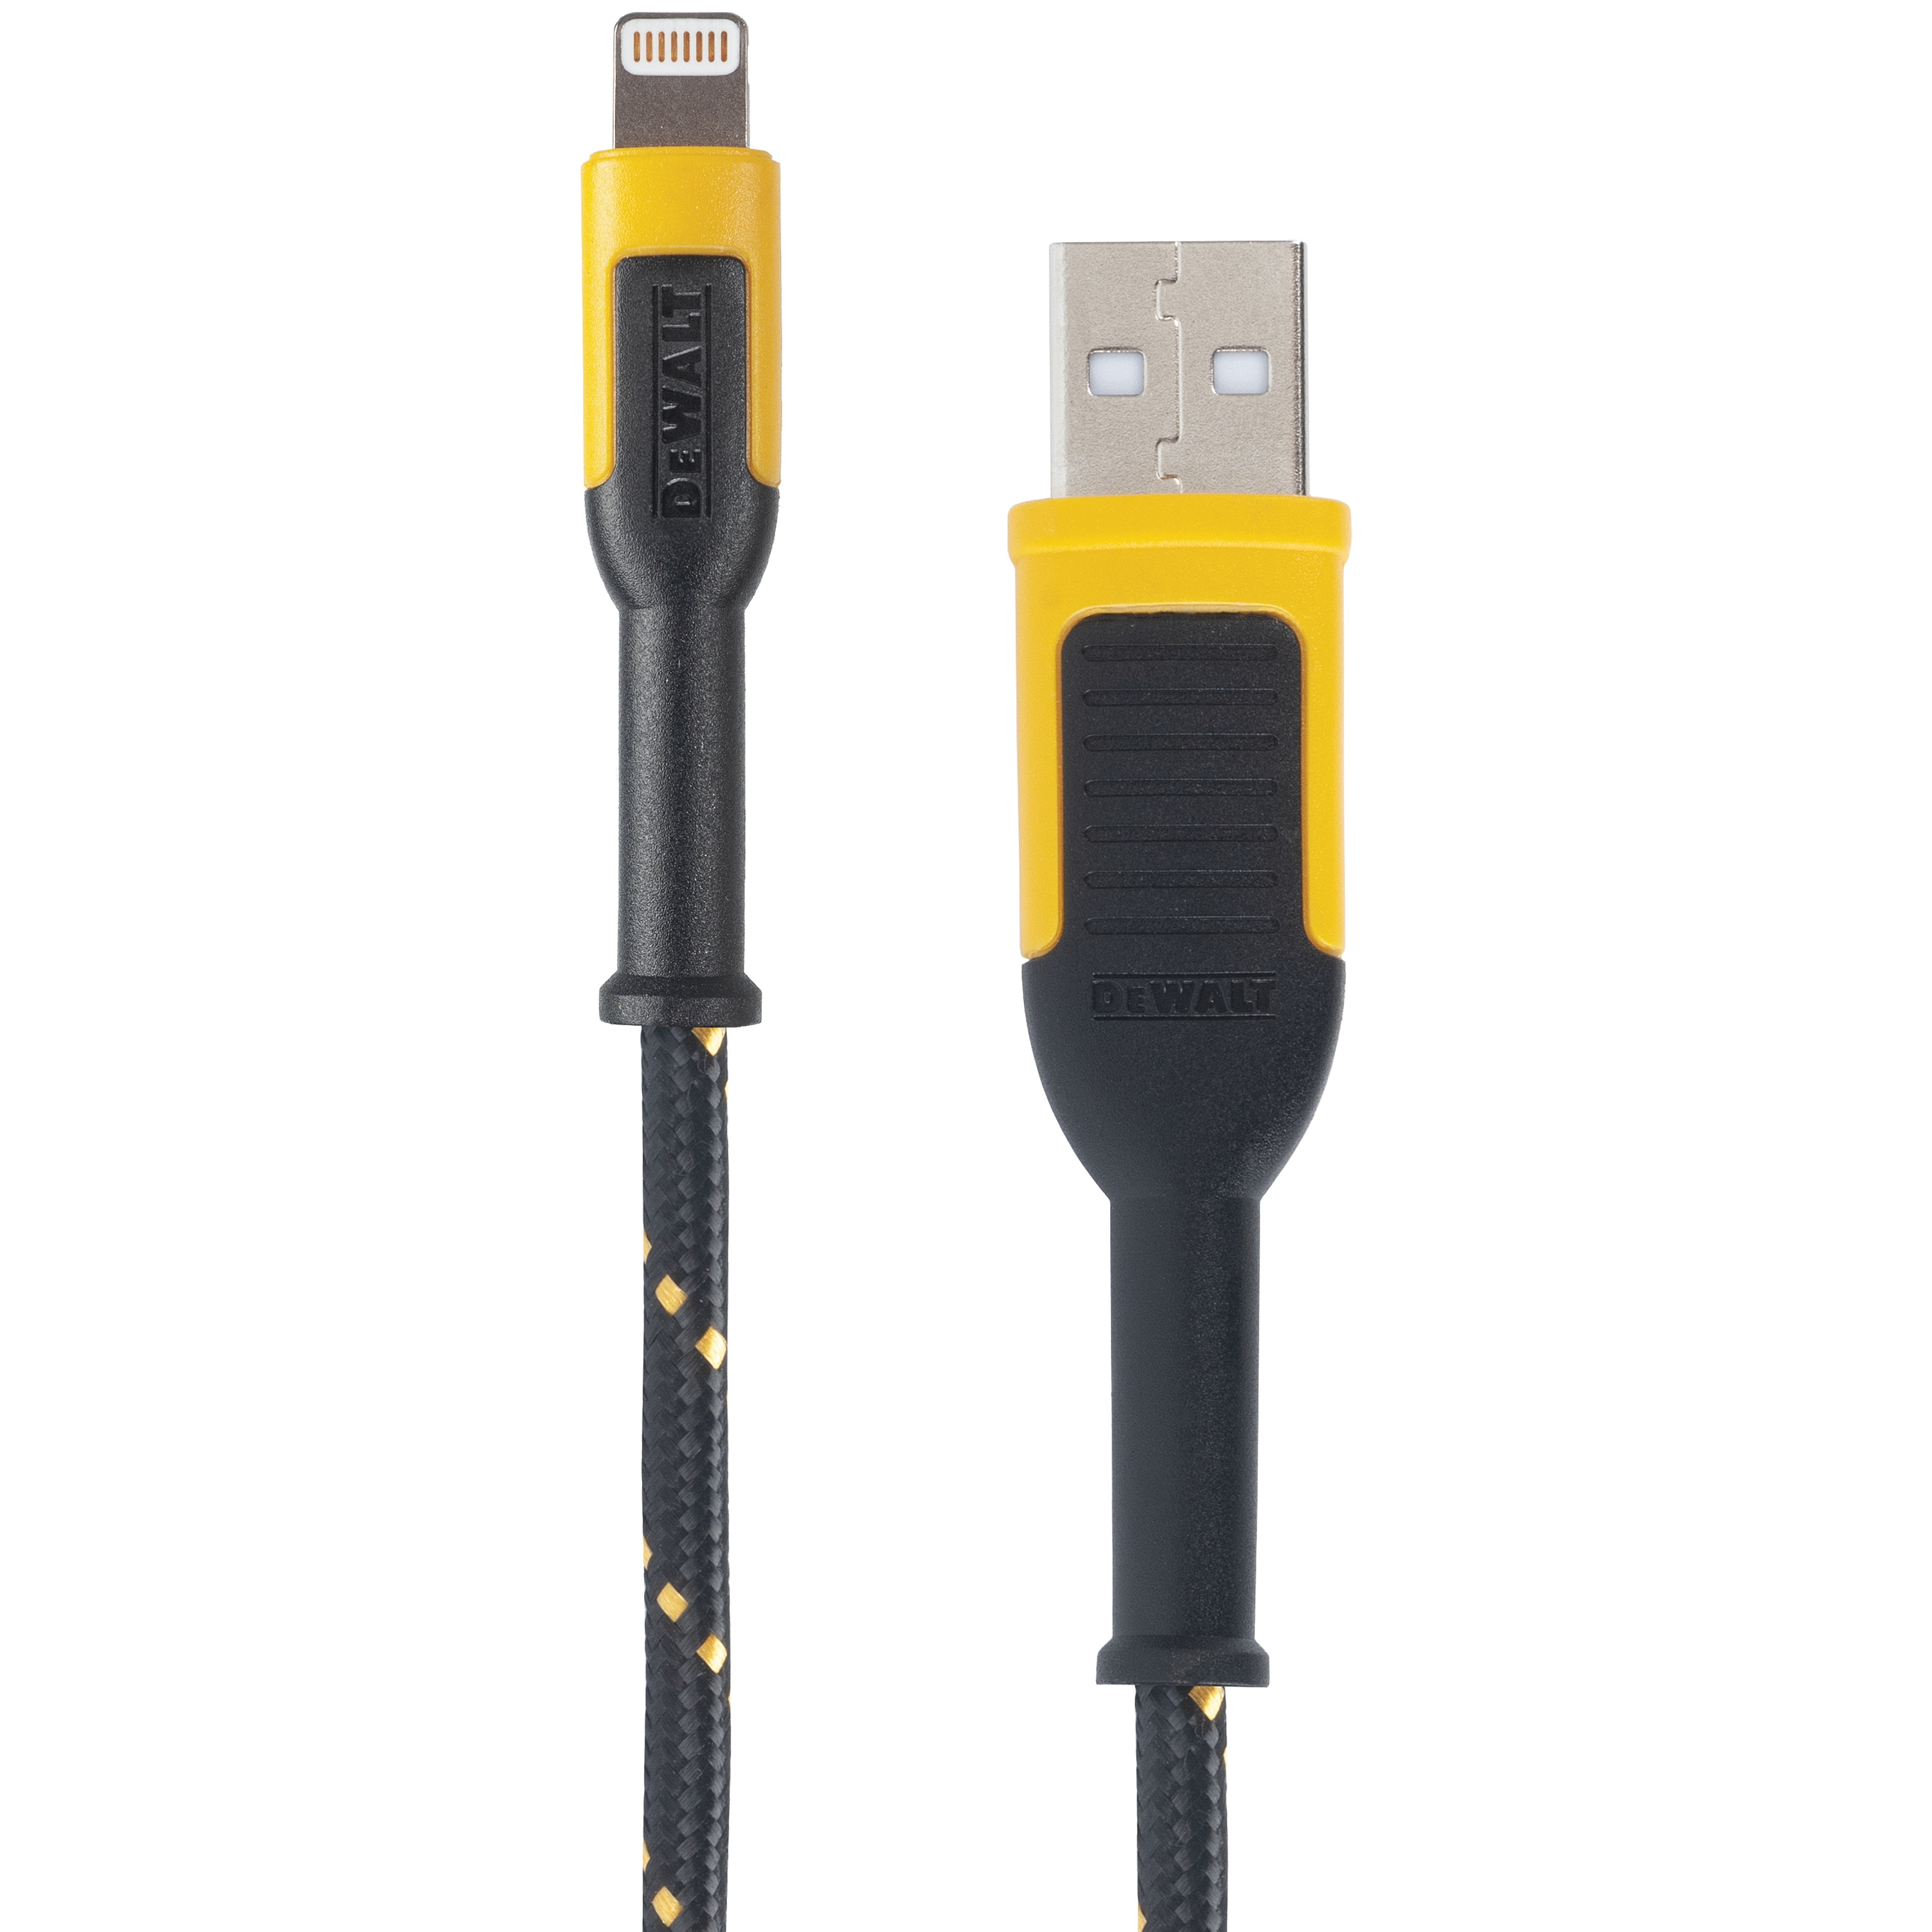 131 1359 DW2 Charger Cable, iOS, USB, Kevlar Fiber Sheath, Black/Yellow Sheath, 4 ft L